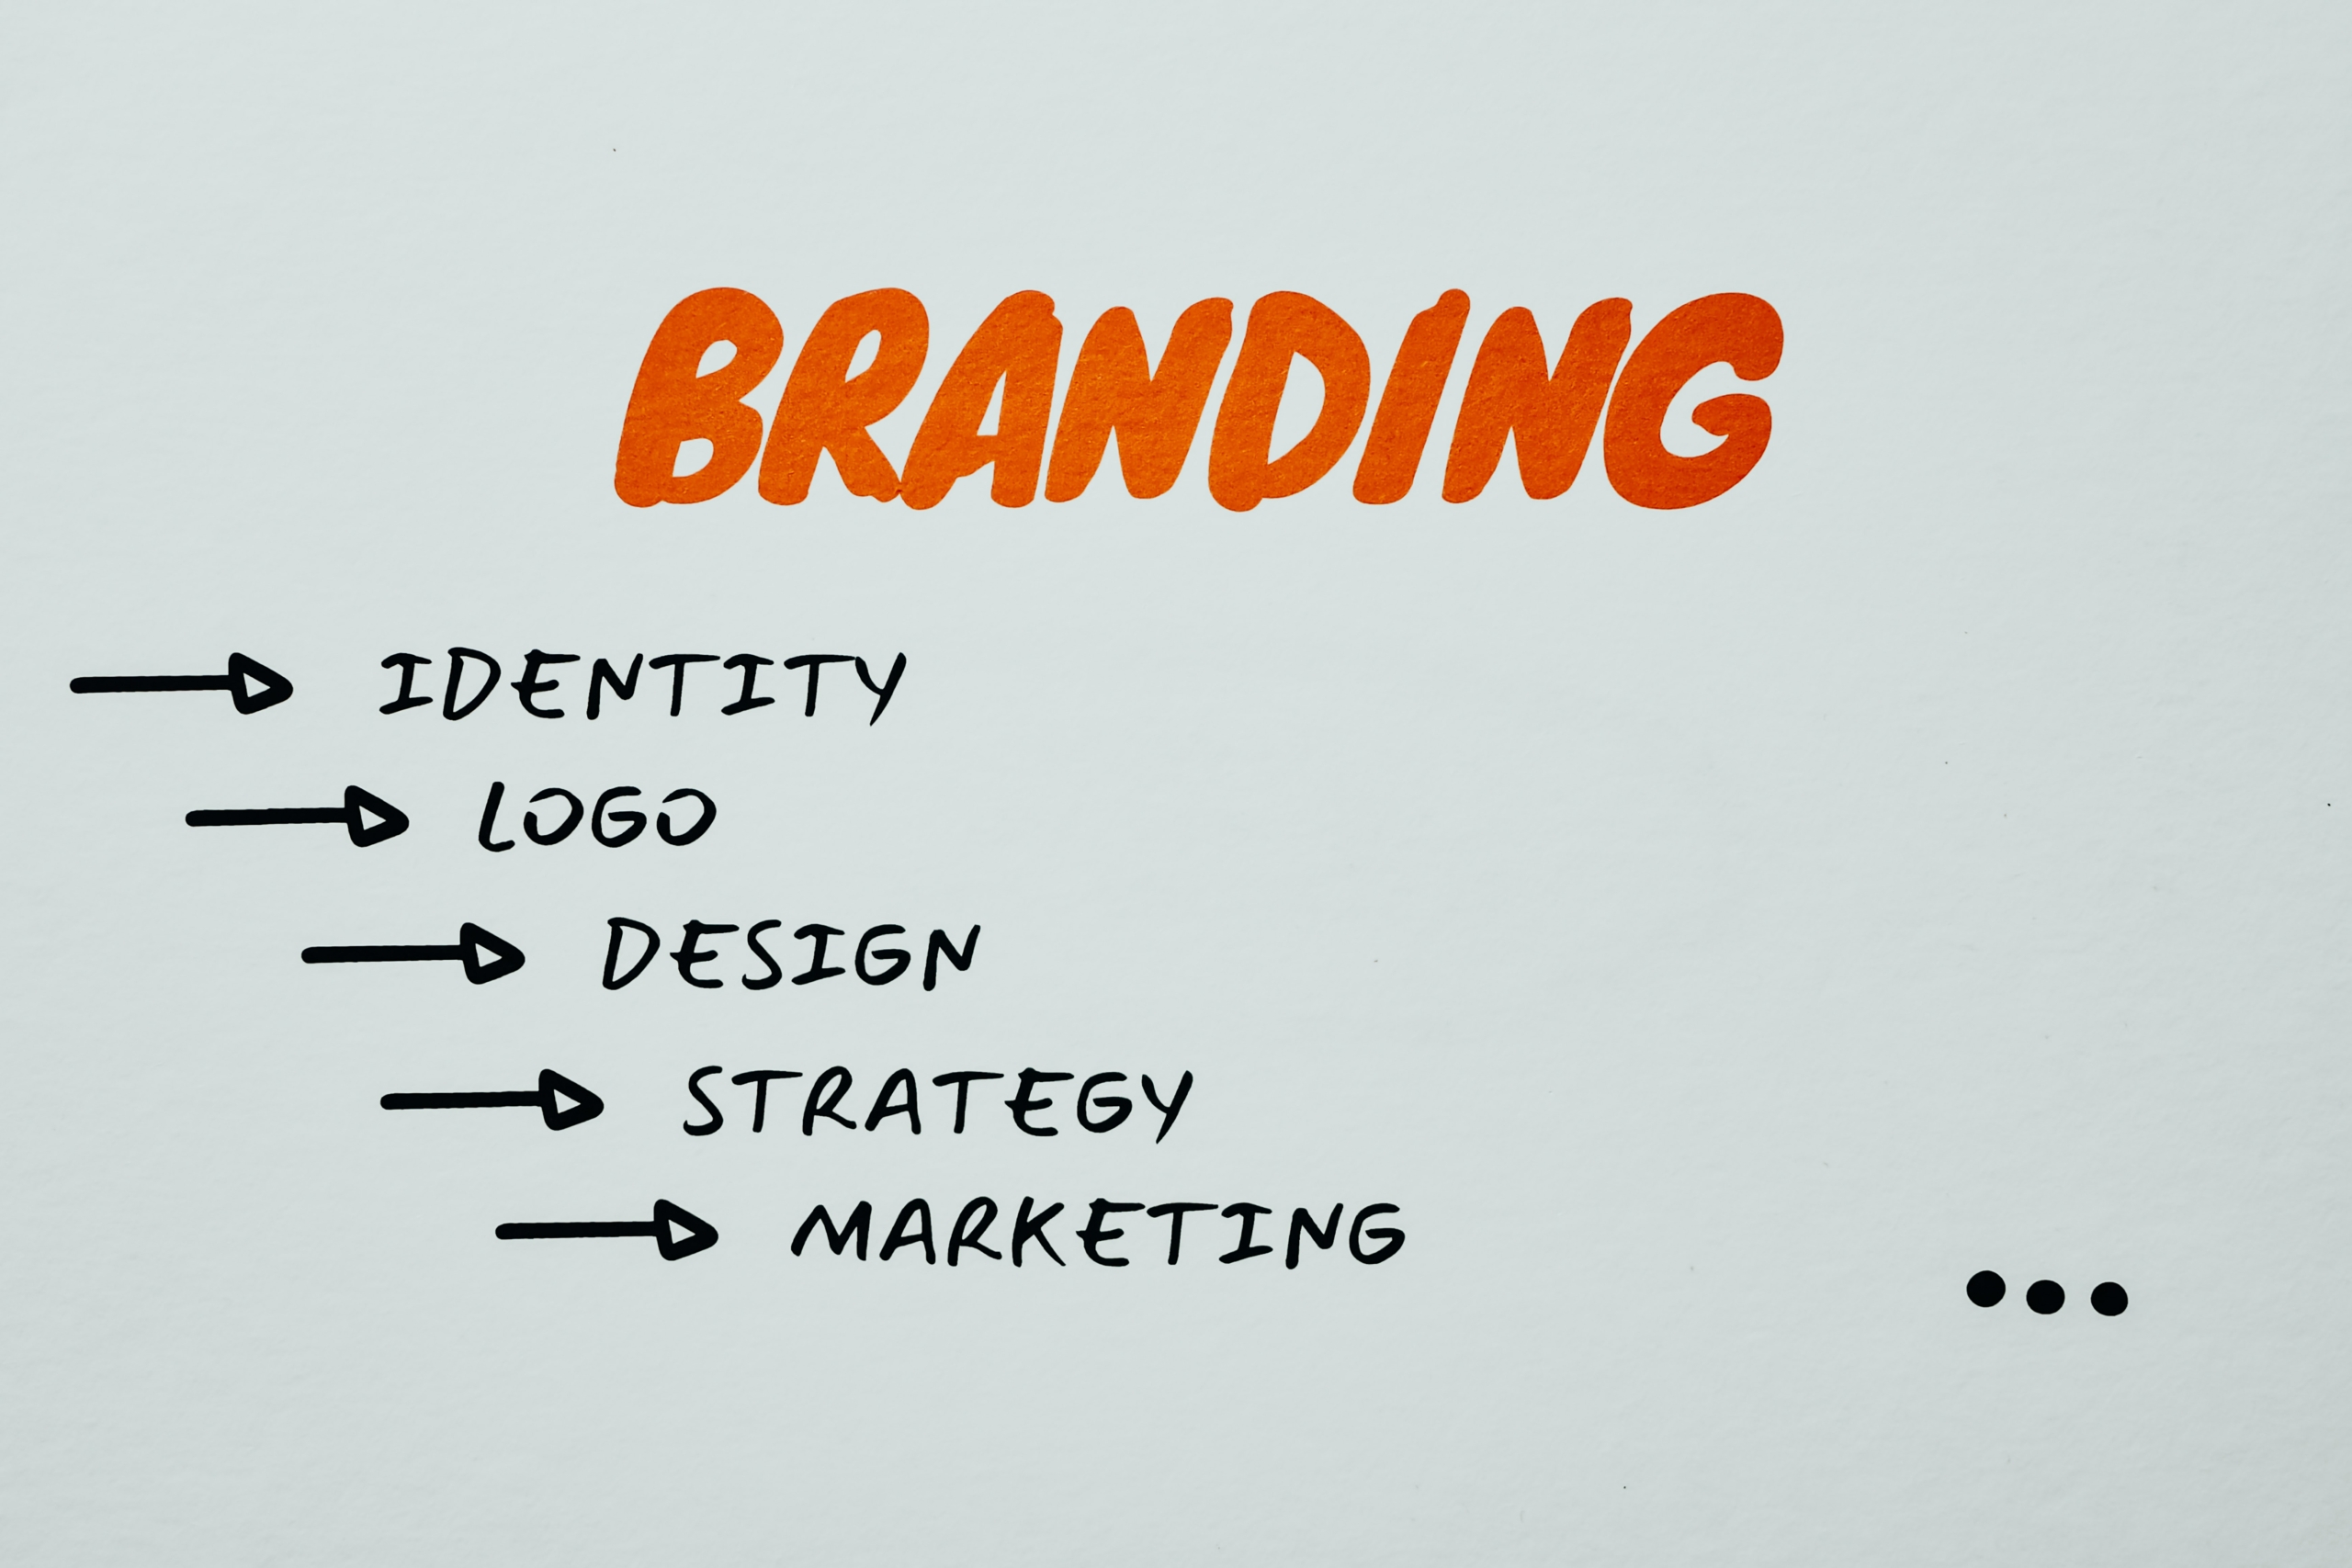 brand-awareness-sheet-explaining-branding-identity-logo-design-strategy-marketing